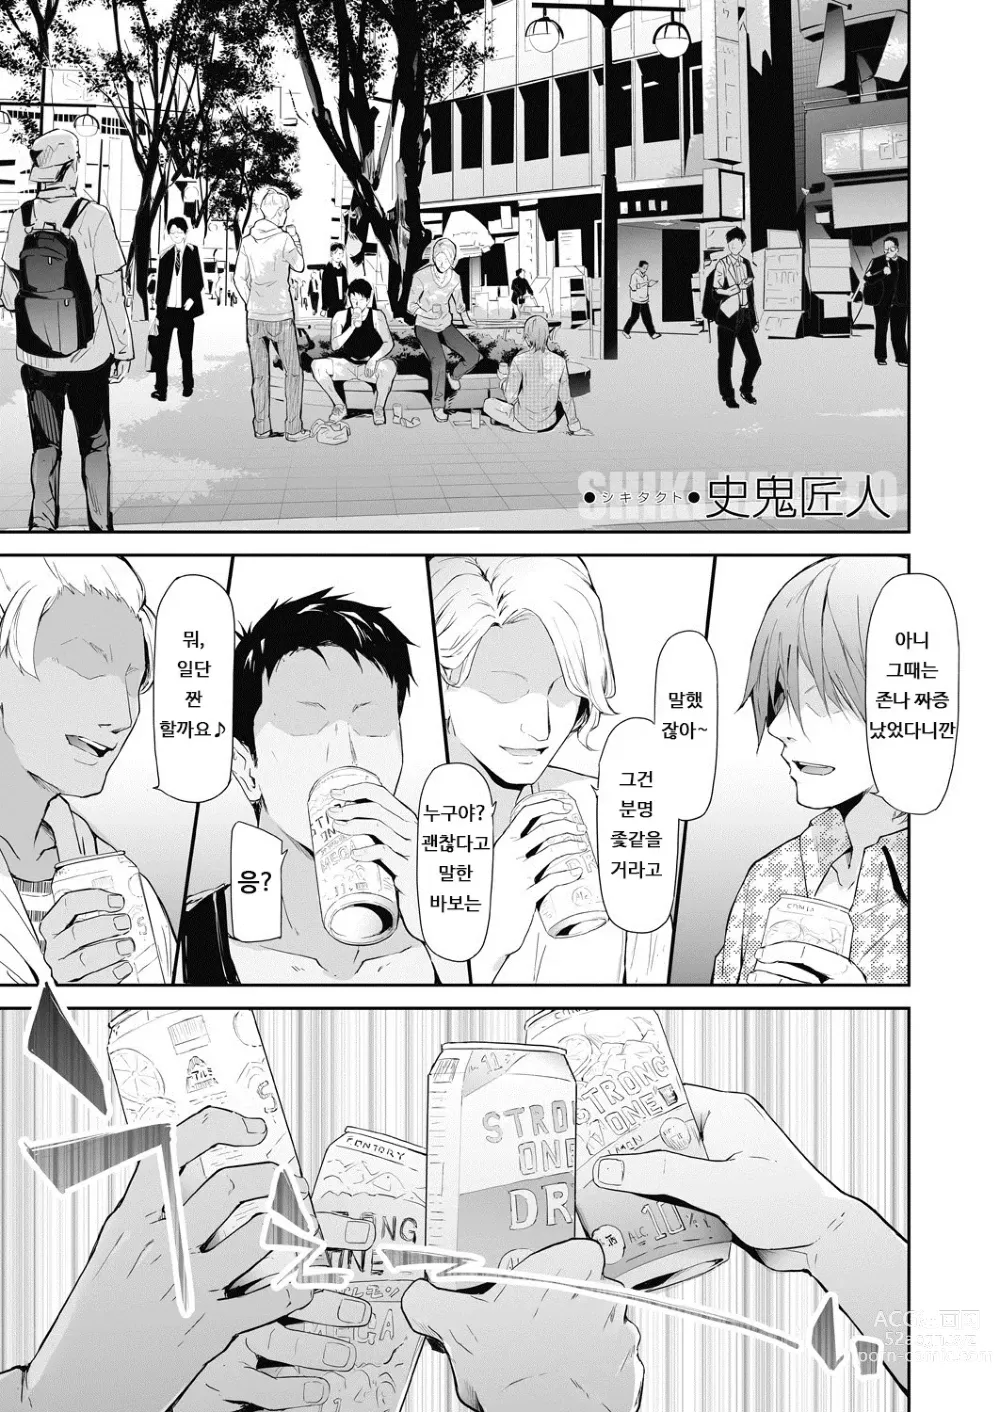 Page 3 of manga TS Revolution